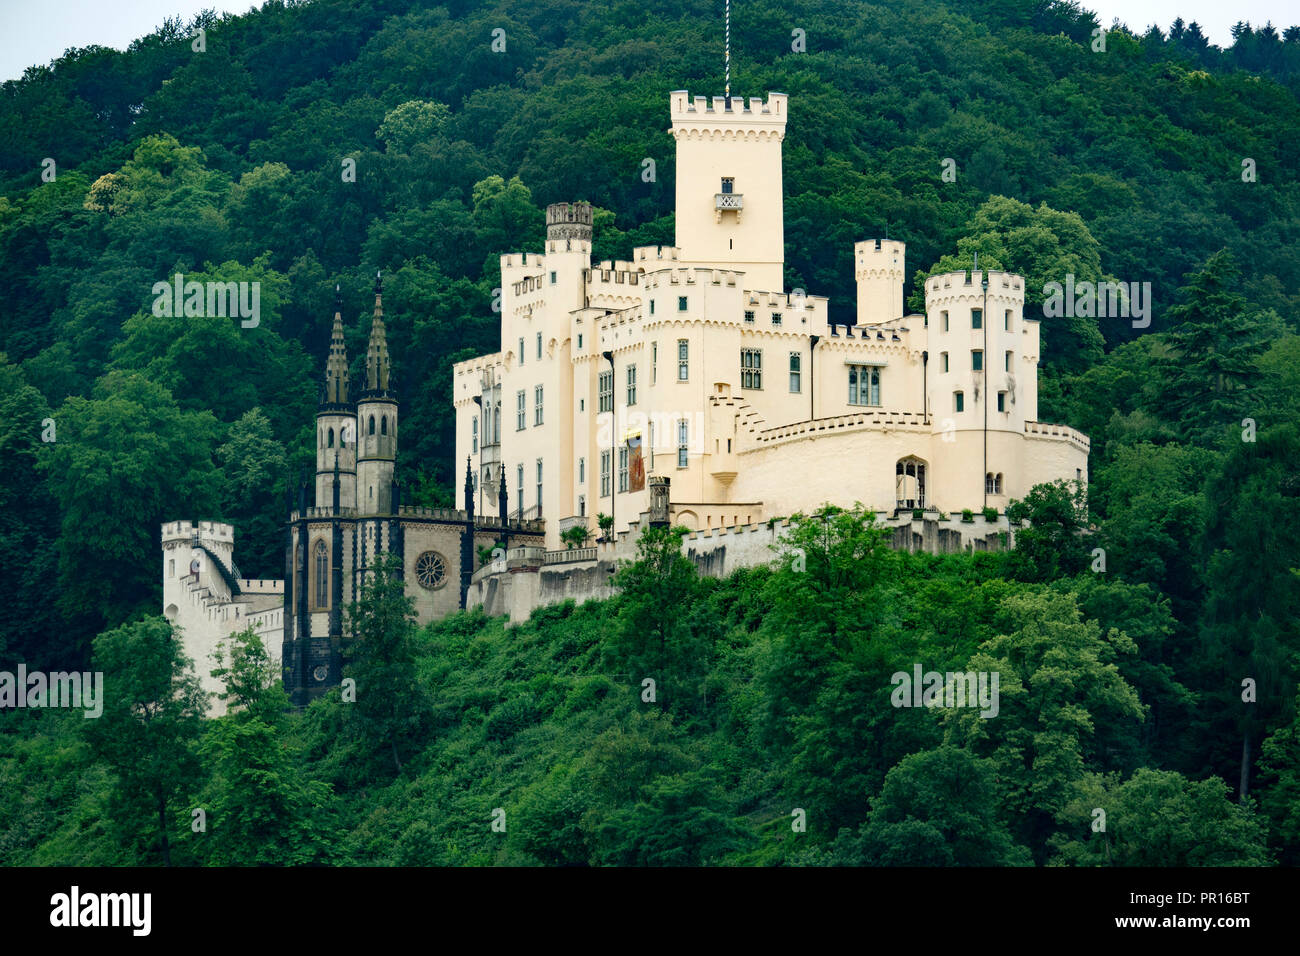 Schloss Stolzenfels bei Koblenz, Rhein, Deutschland, Europa Stockfoto